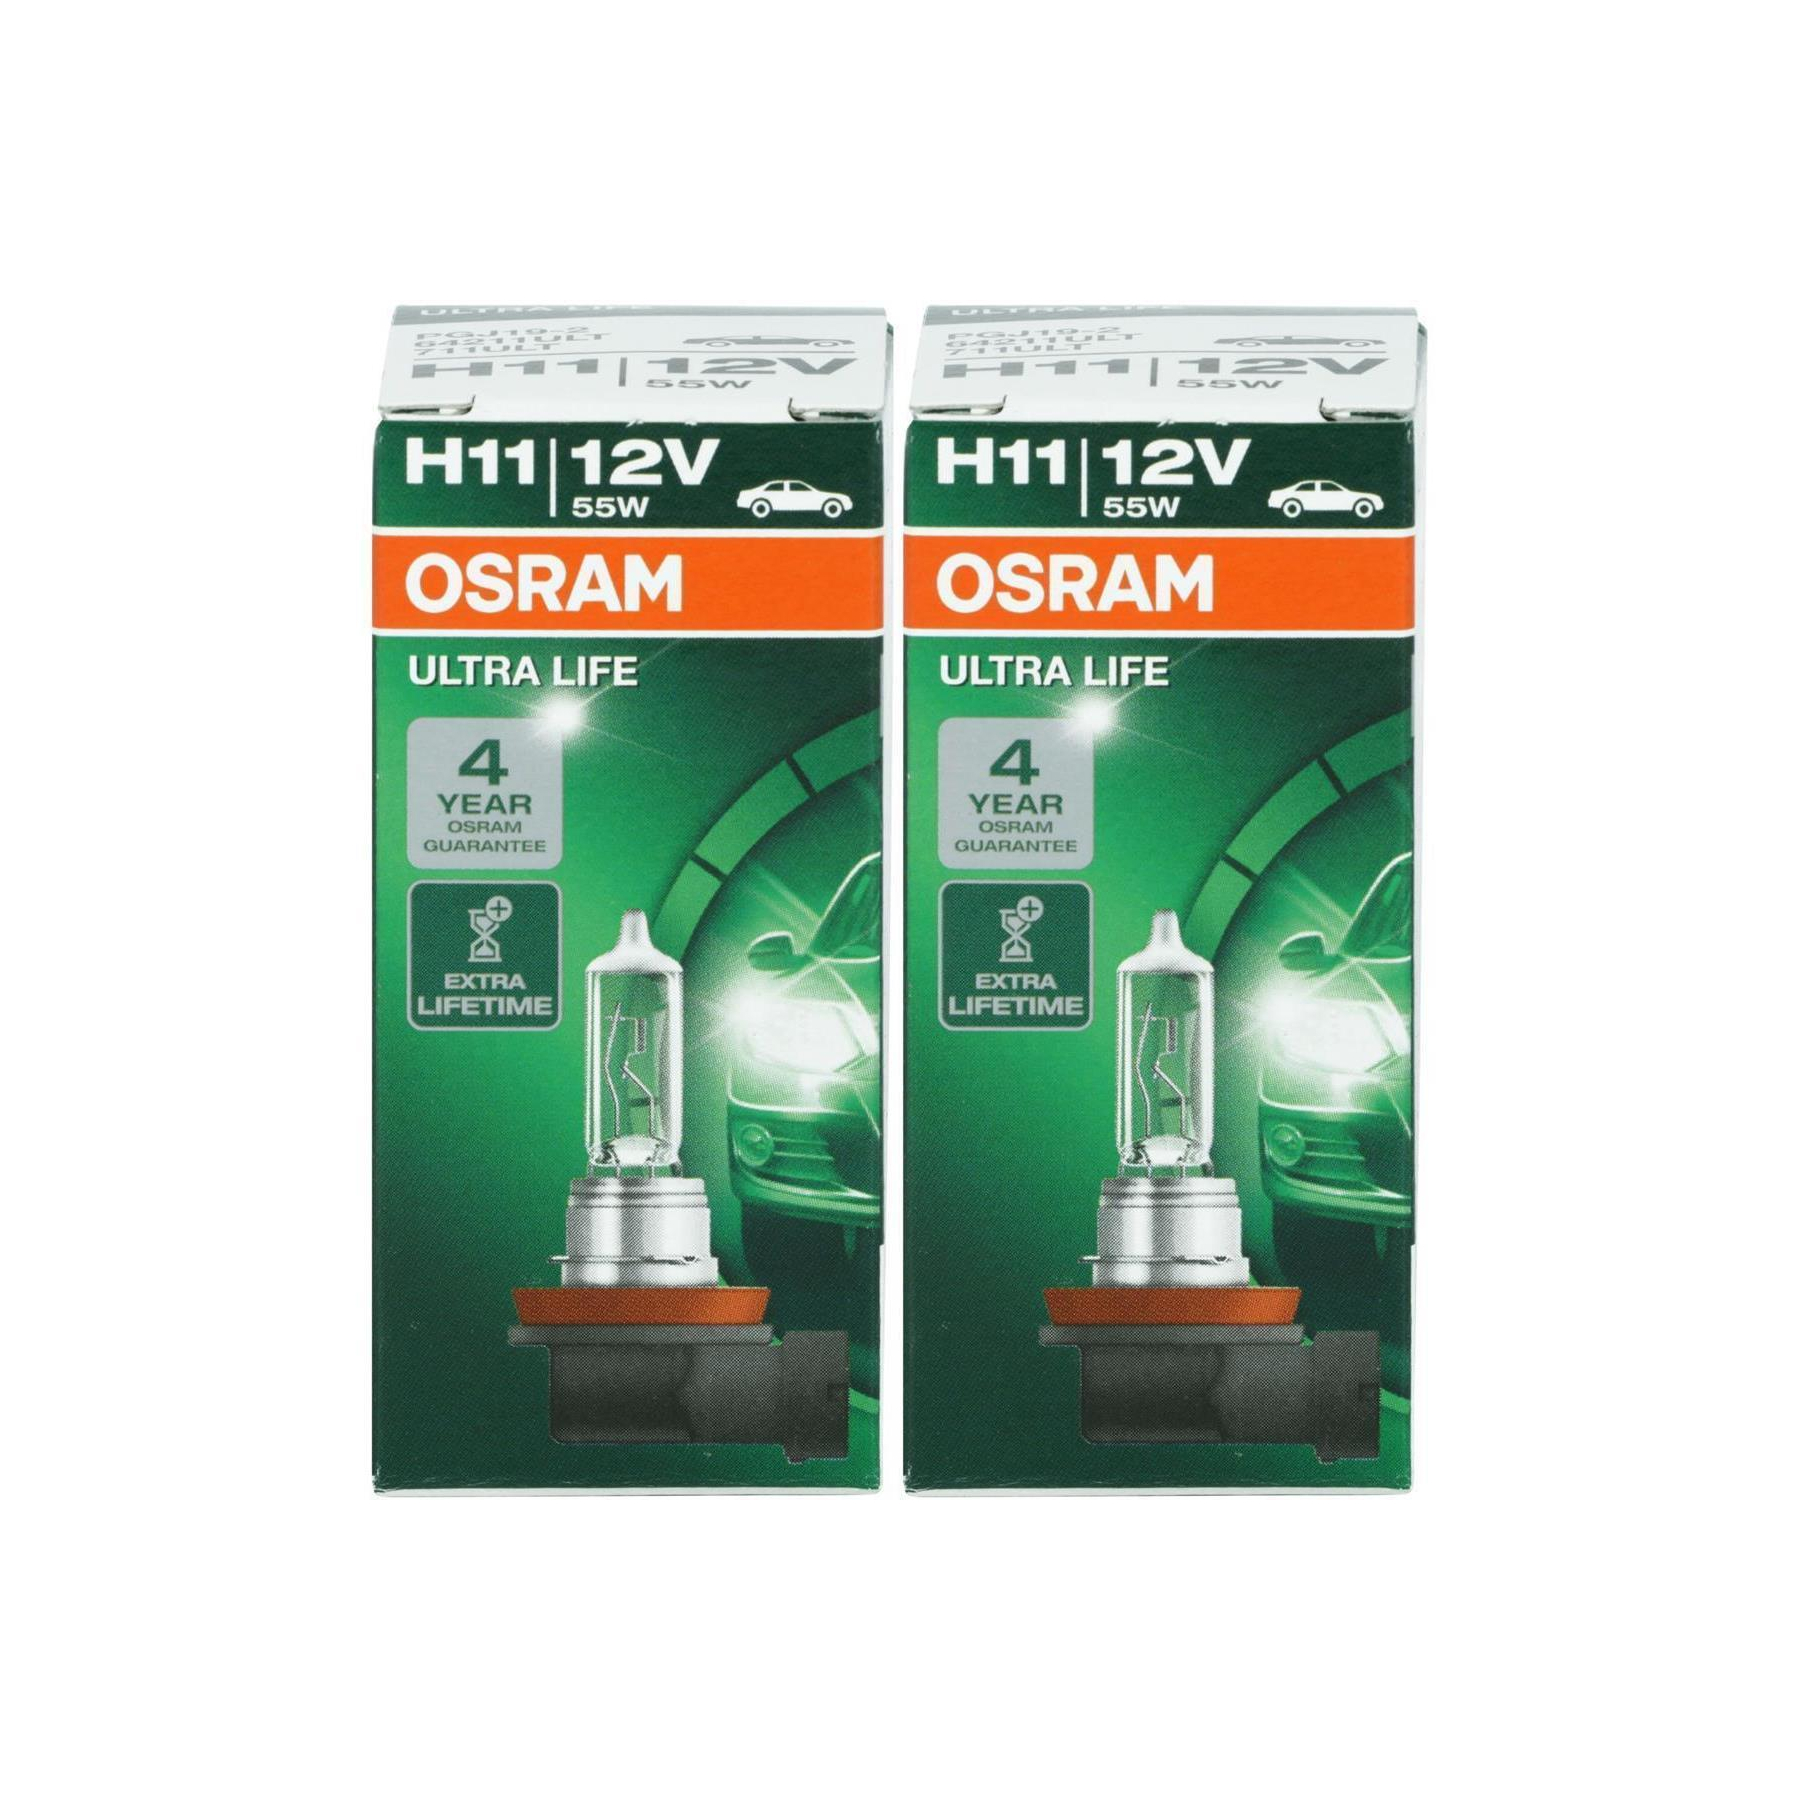 https://electronicx.de/media/image/product/3023/lg/osram-ultra-life-h11-64211ult-autolampe-2-stueck.jpg